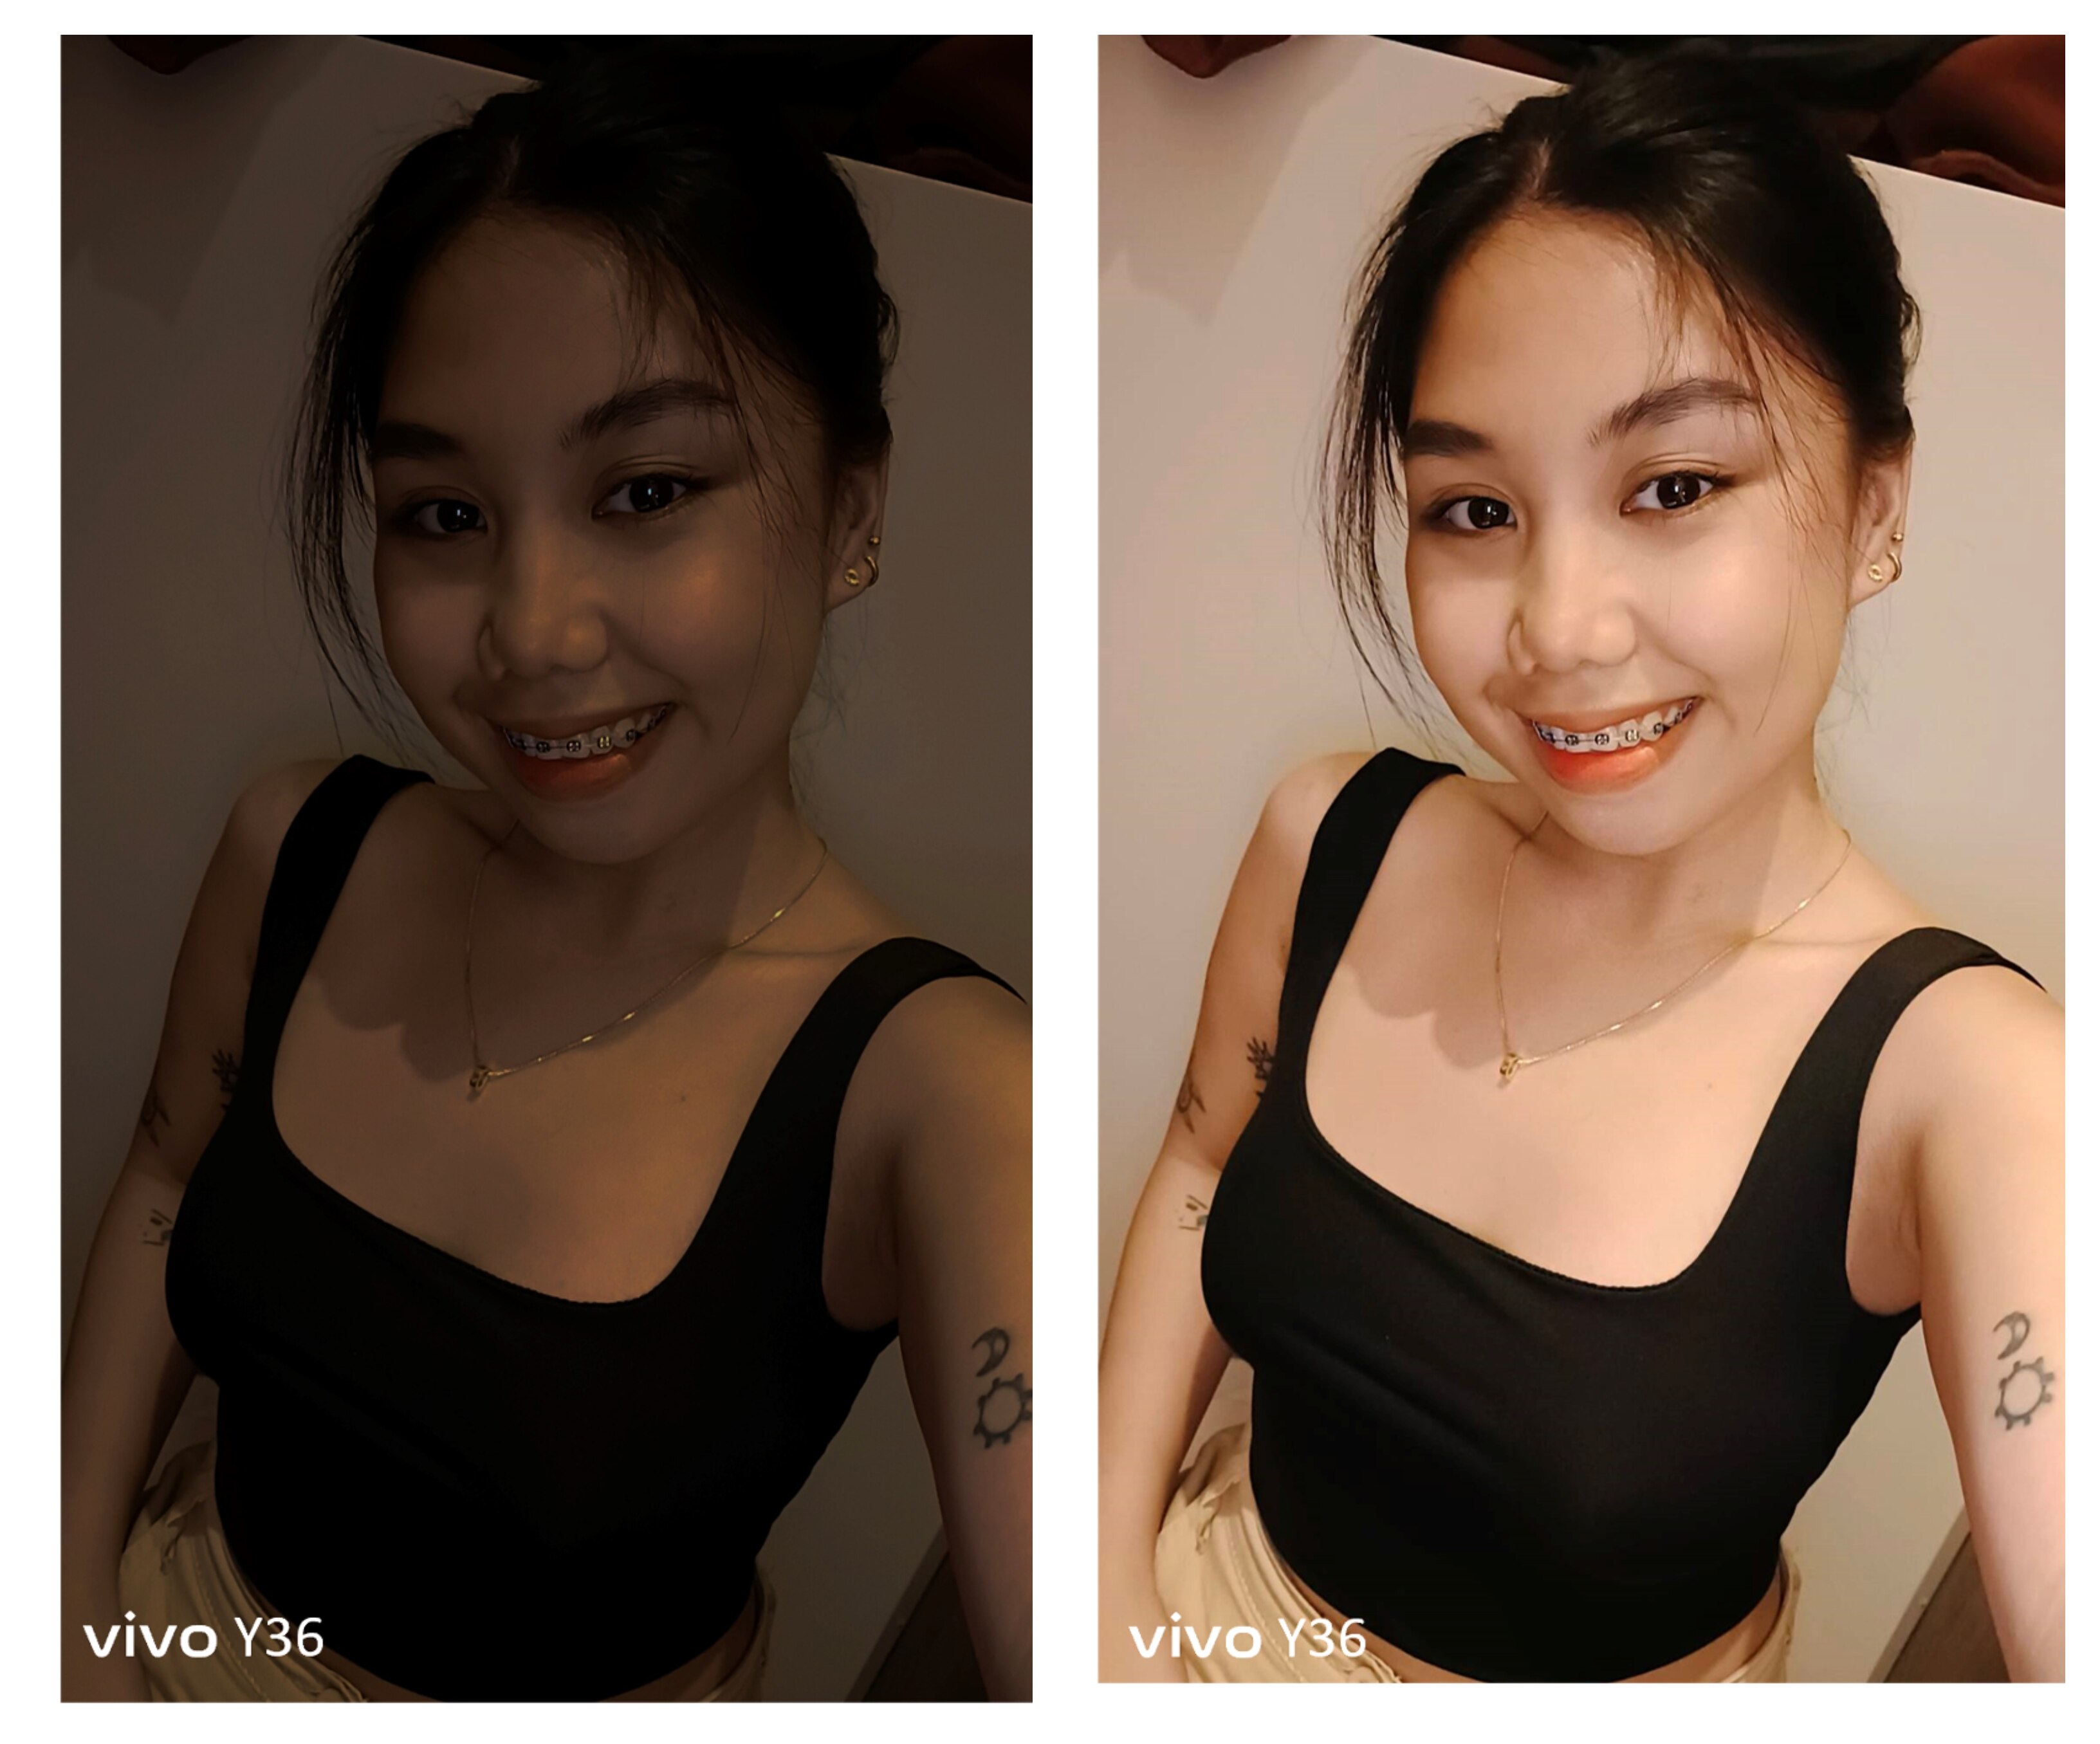 Normal Selfie vs. Super Night Selfie with Aura Screen Light. Photo source: vivo Philippines